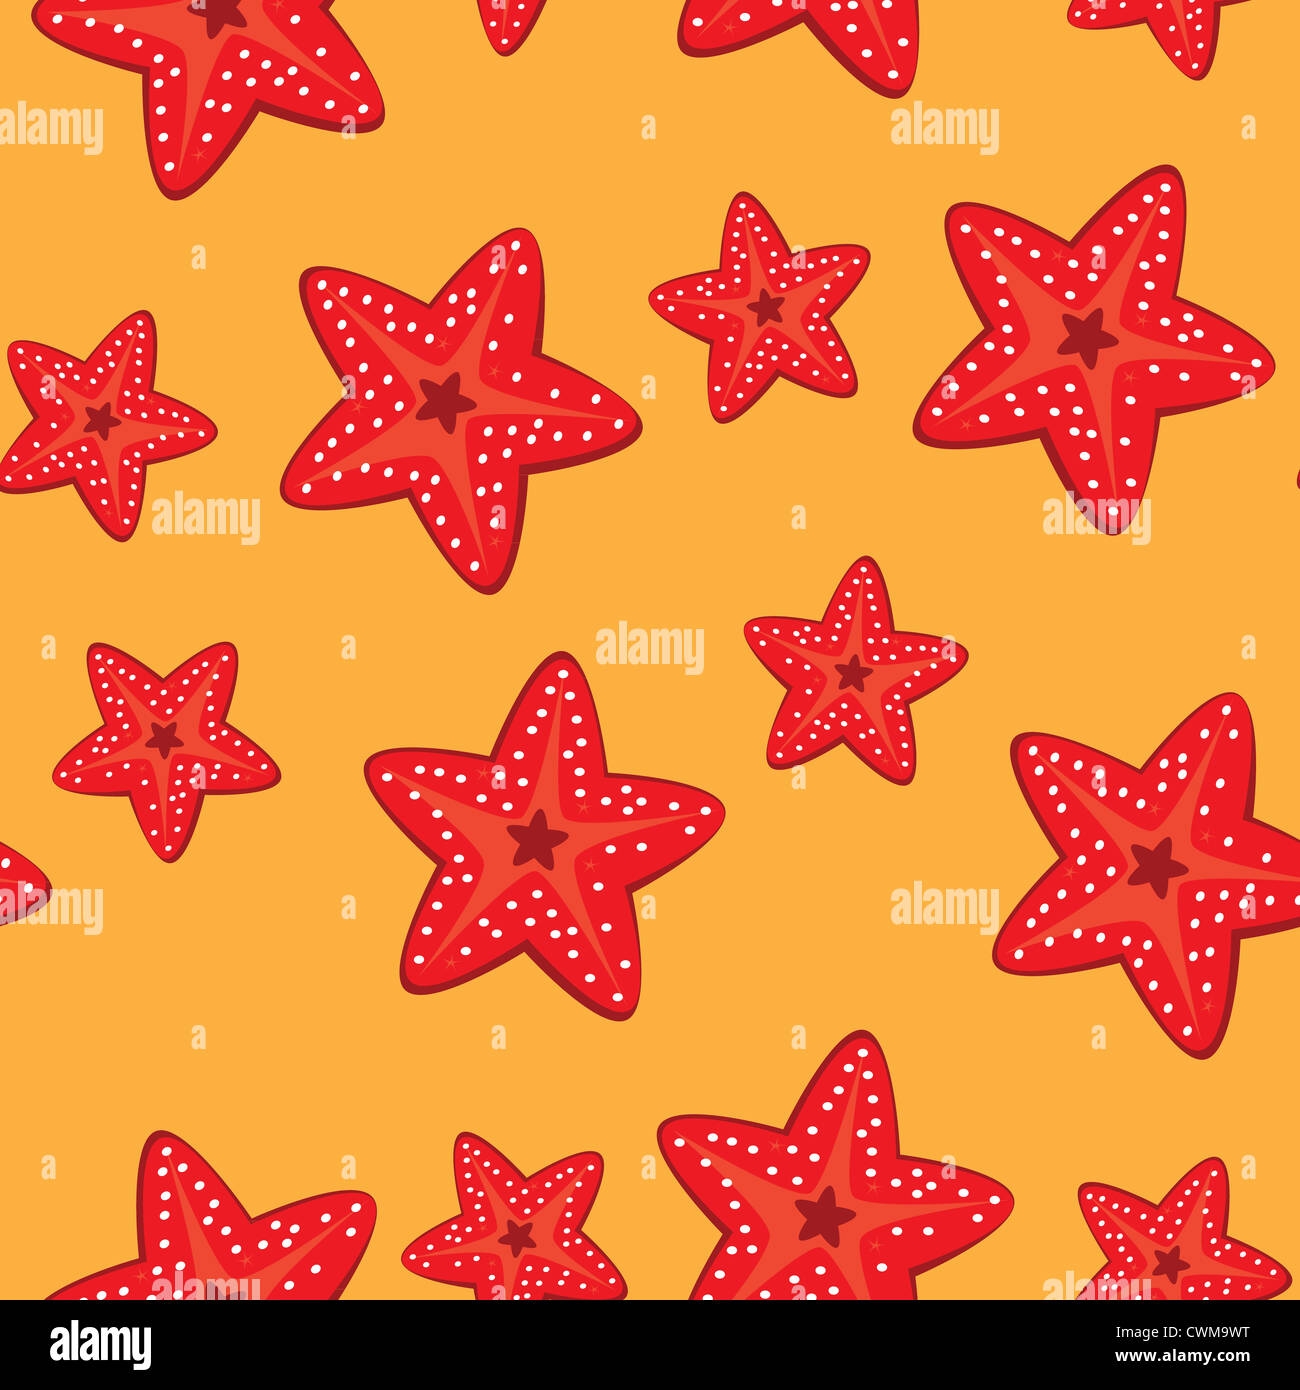 Seamless texture of starfish. Illustration of the designer on orange background Stock Photo